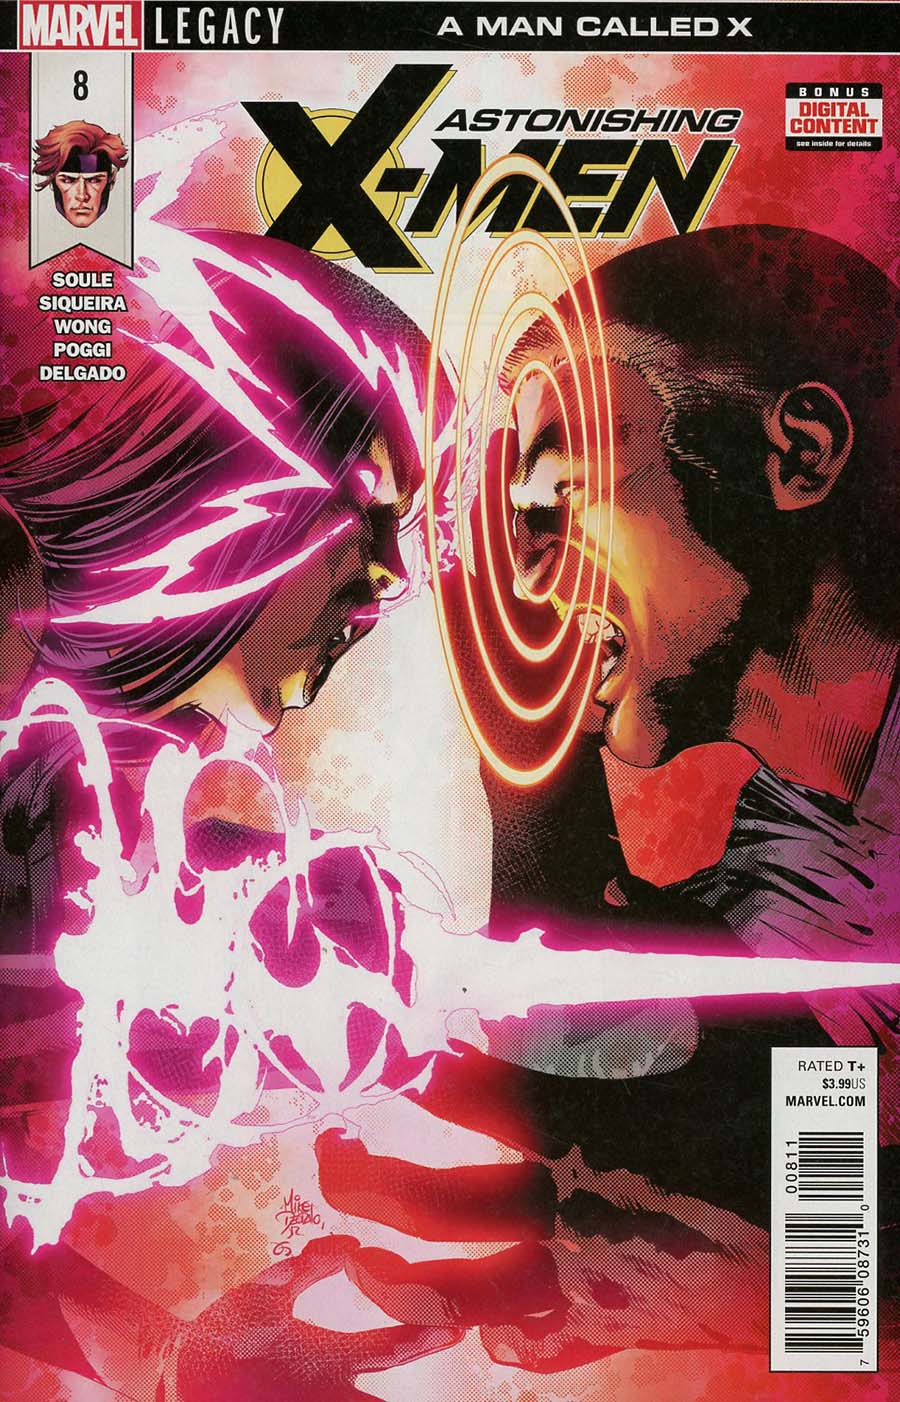 Astonishing X-Men Vol 4 #8 (Marvel Legacy Tie-In)